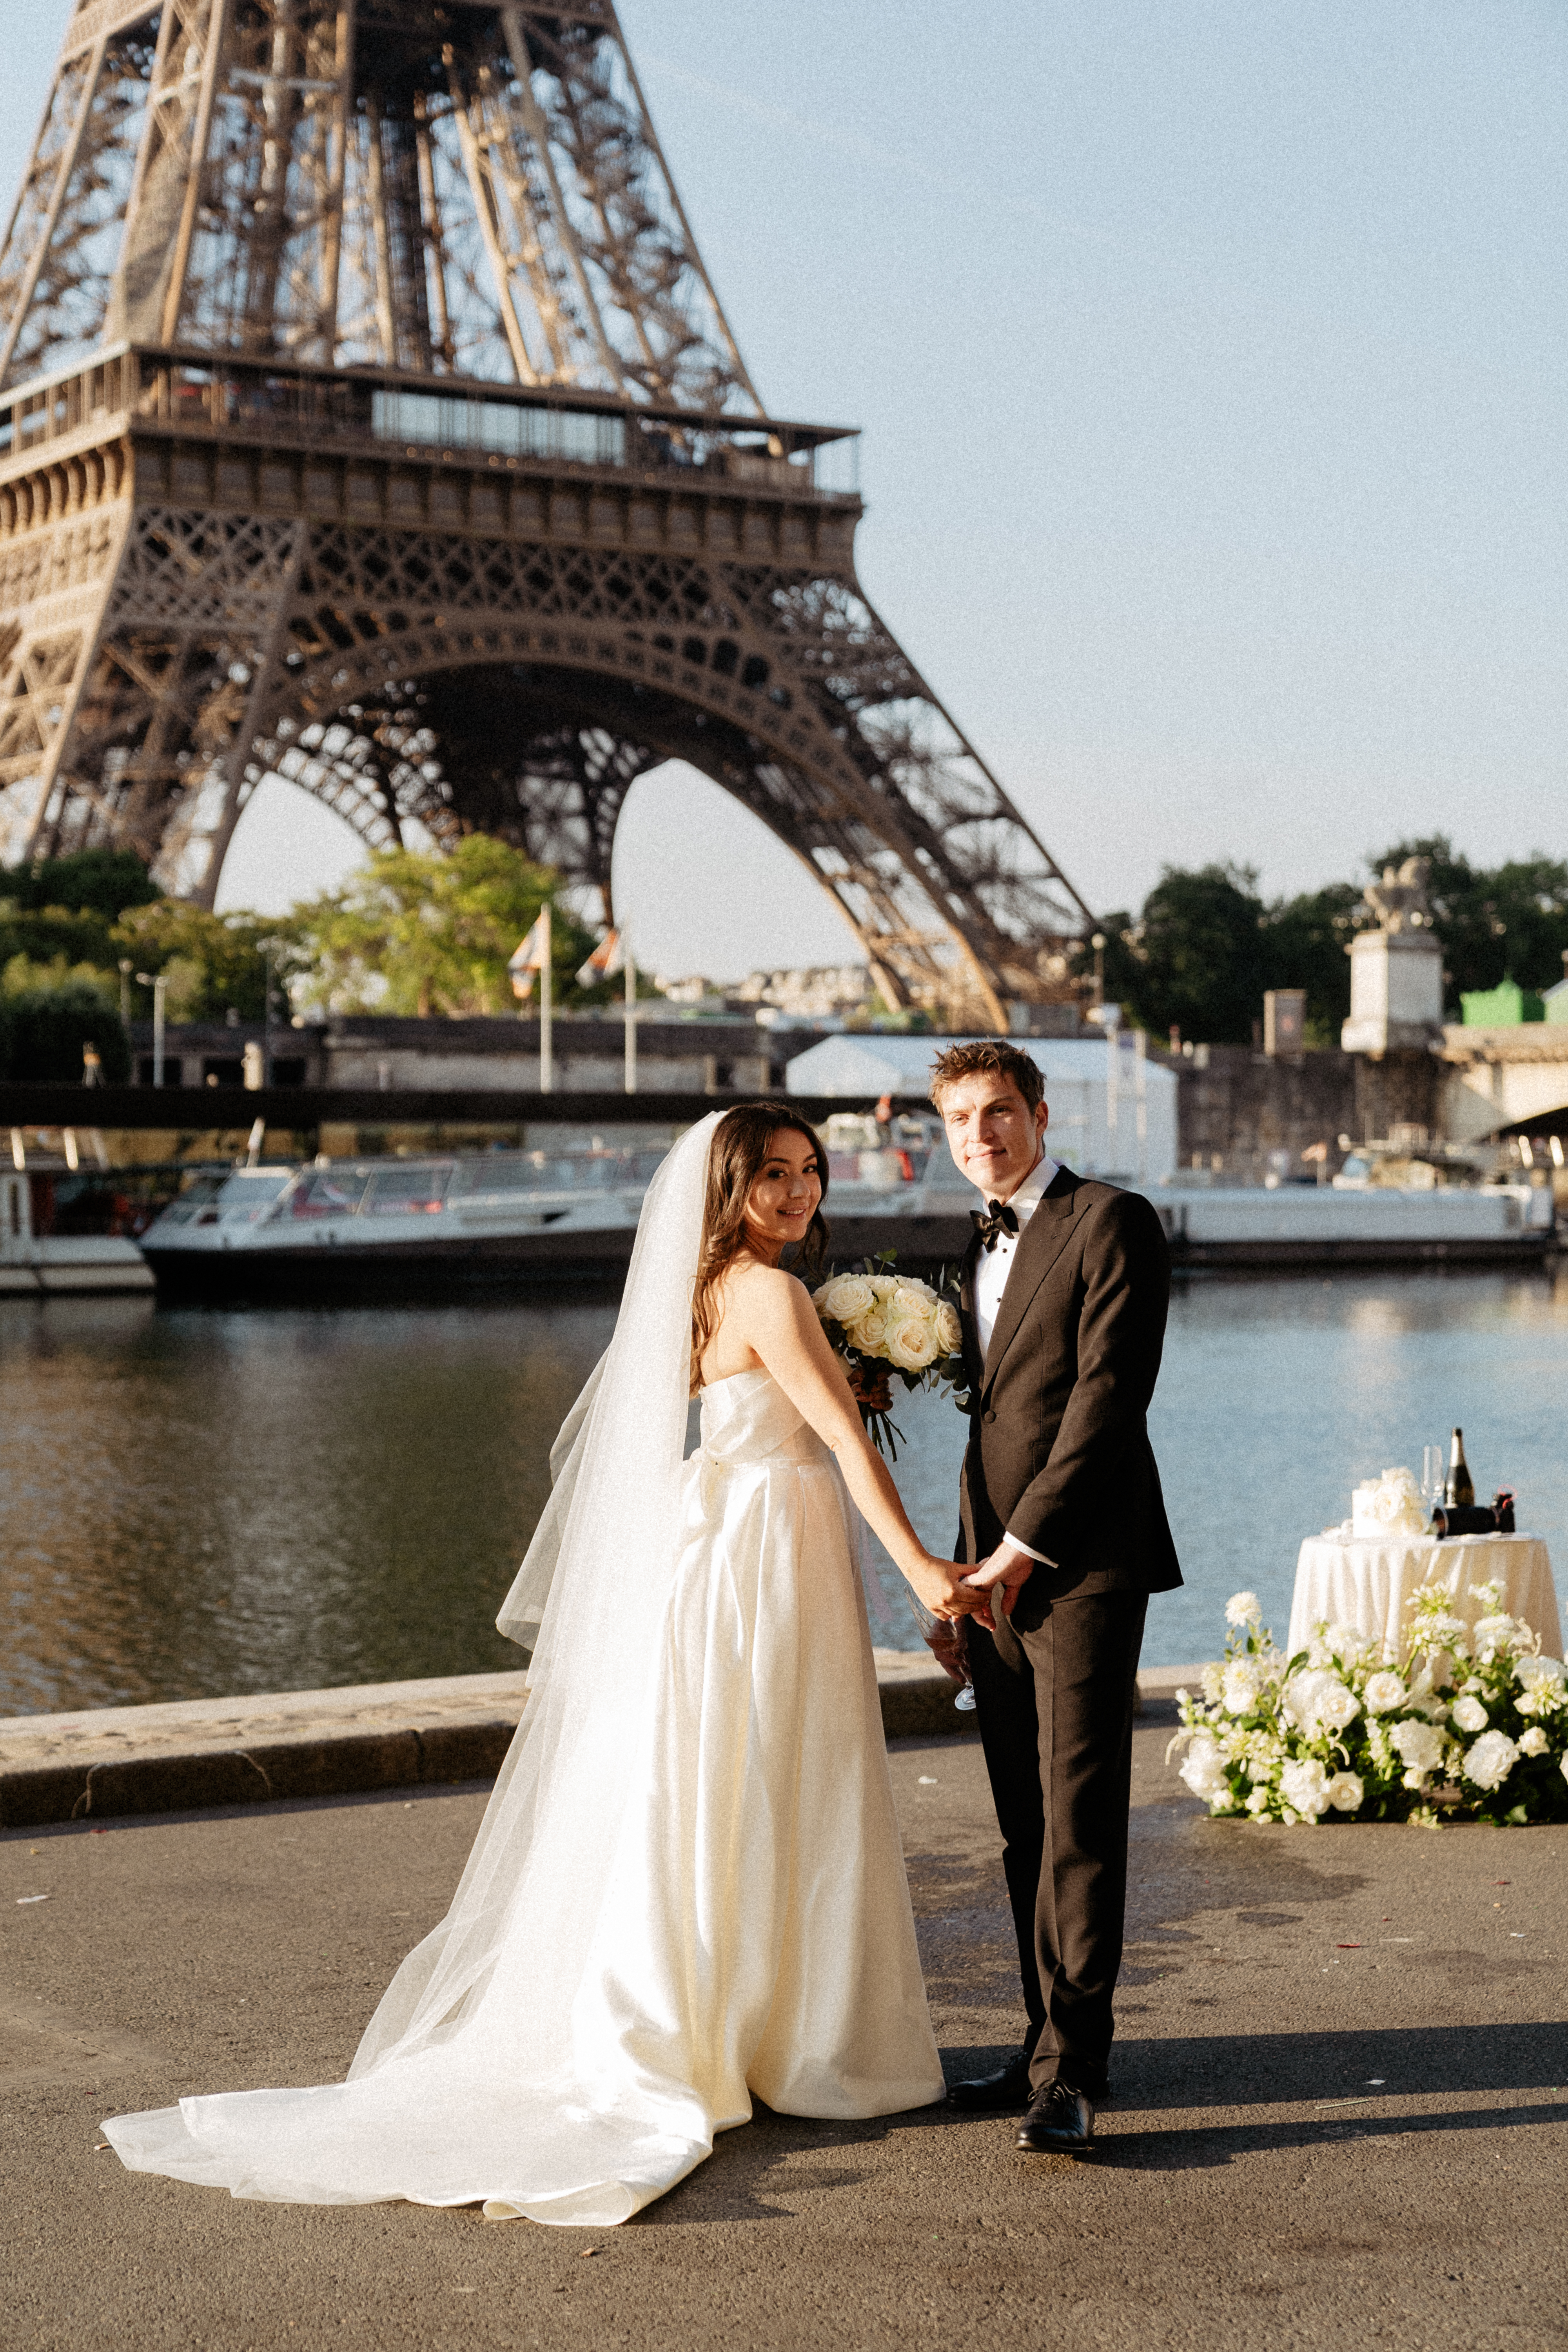 Best Elepement Ceremony Locations  Seine River -  Eiffel Tower view